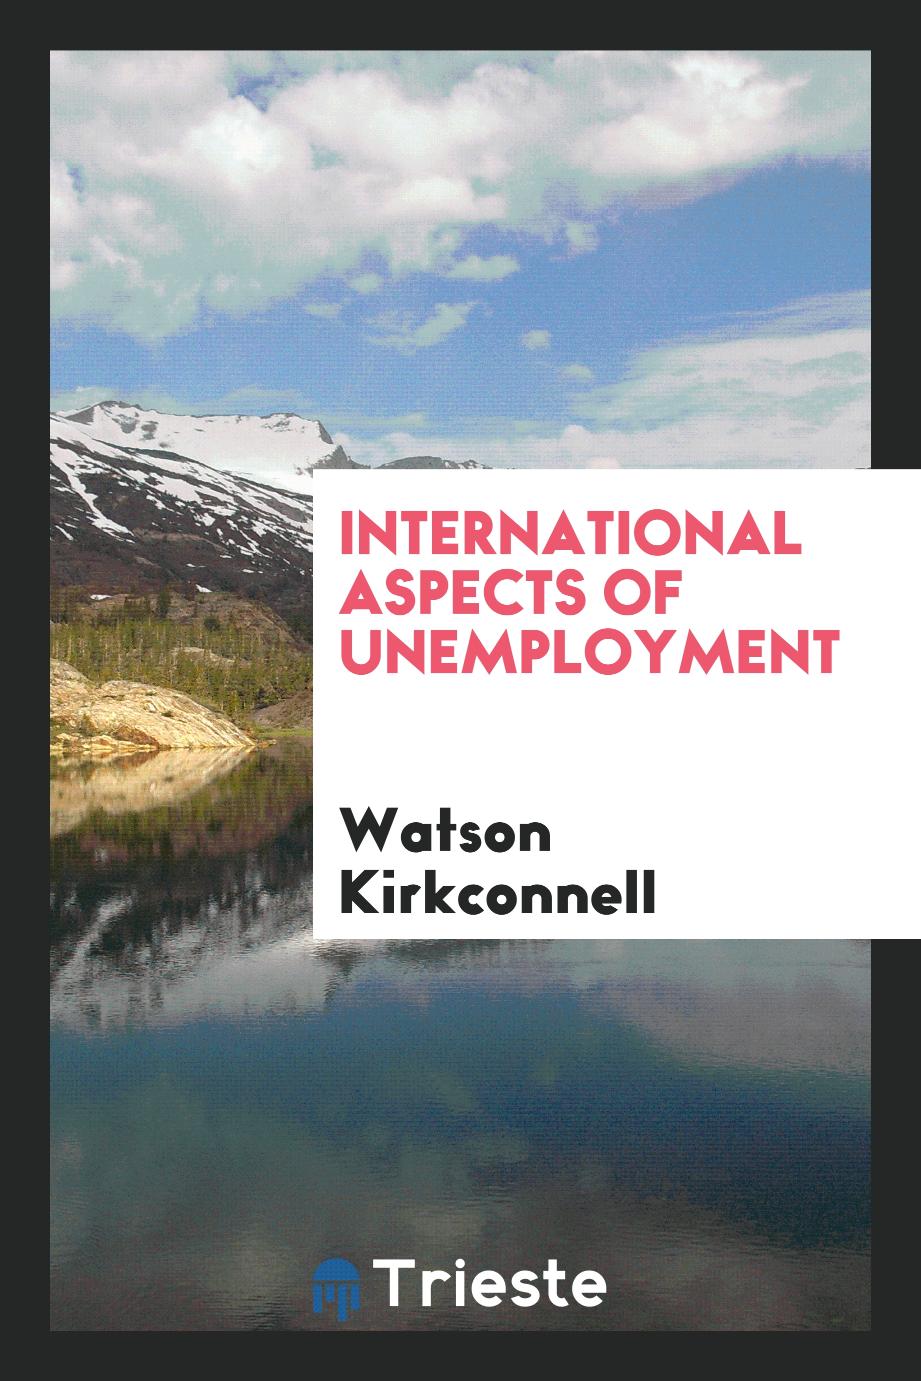 International aspects of unemployment